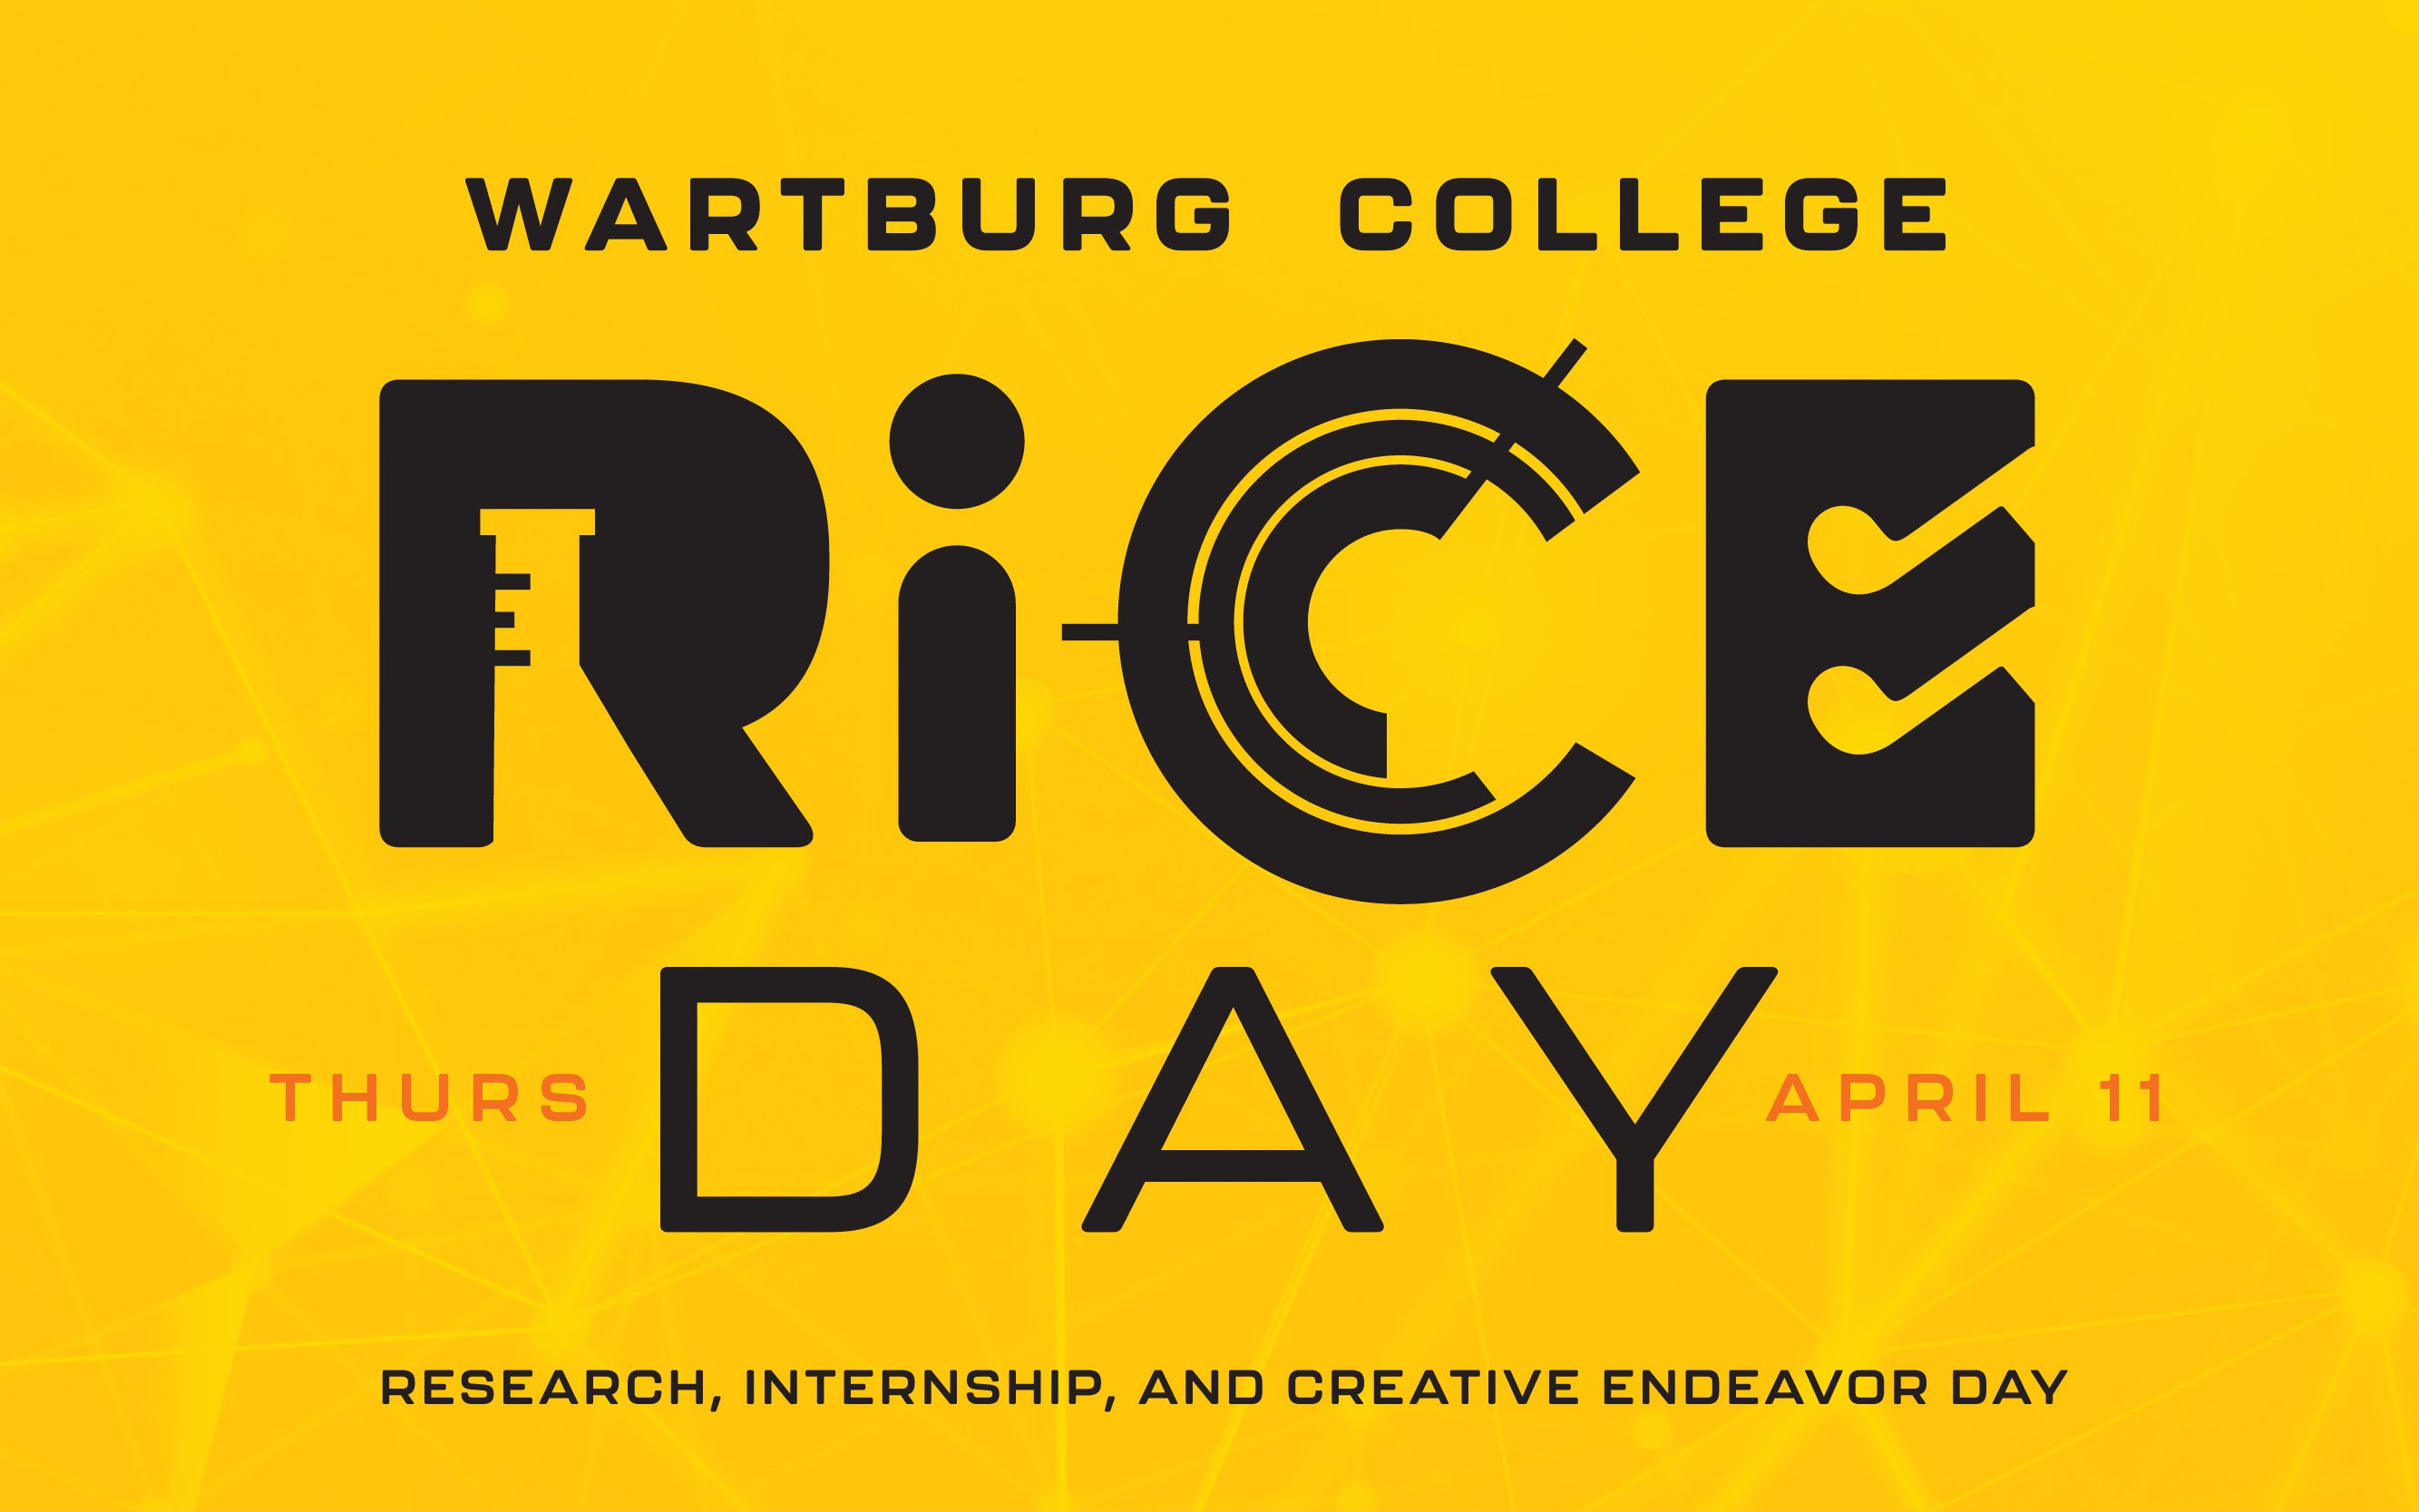 Wartburg College Research, Internship, and Creative Endeavor Day: Thursday, April 11.